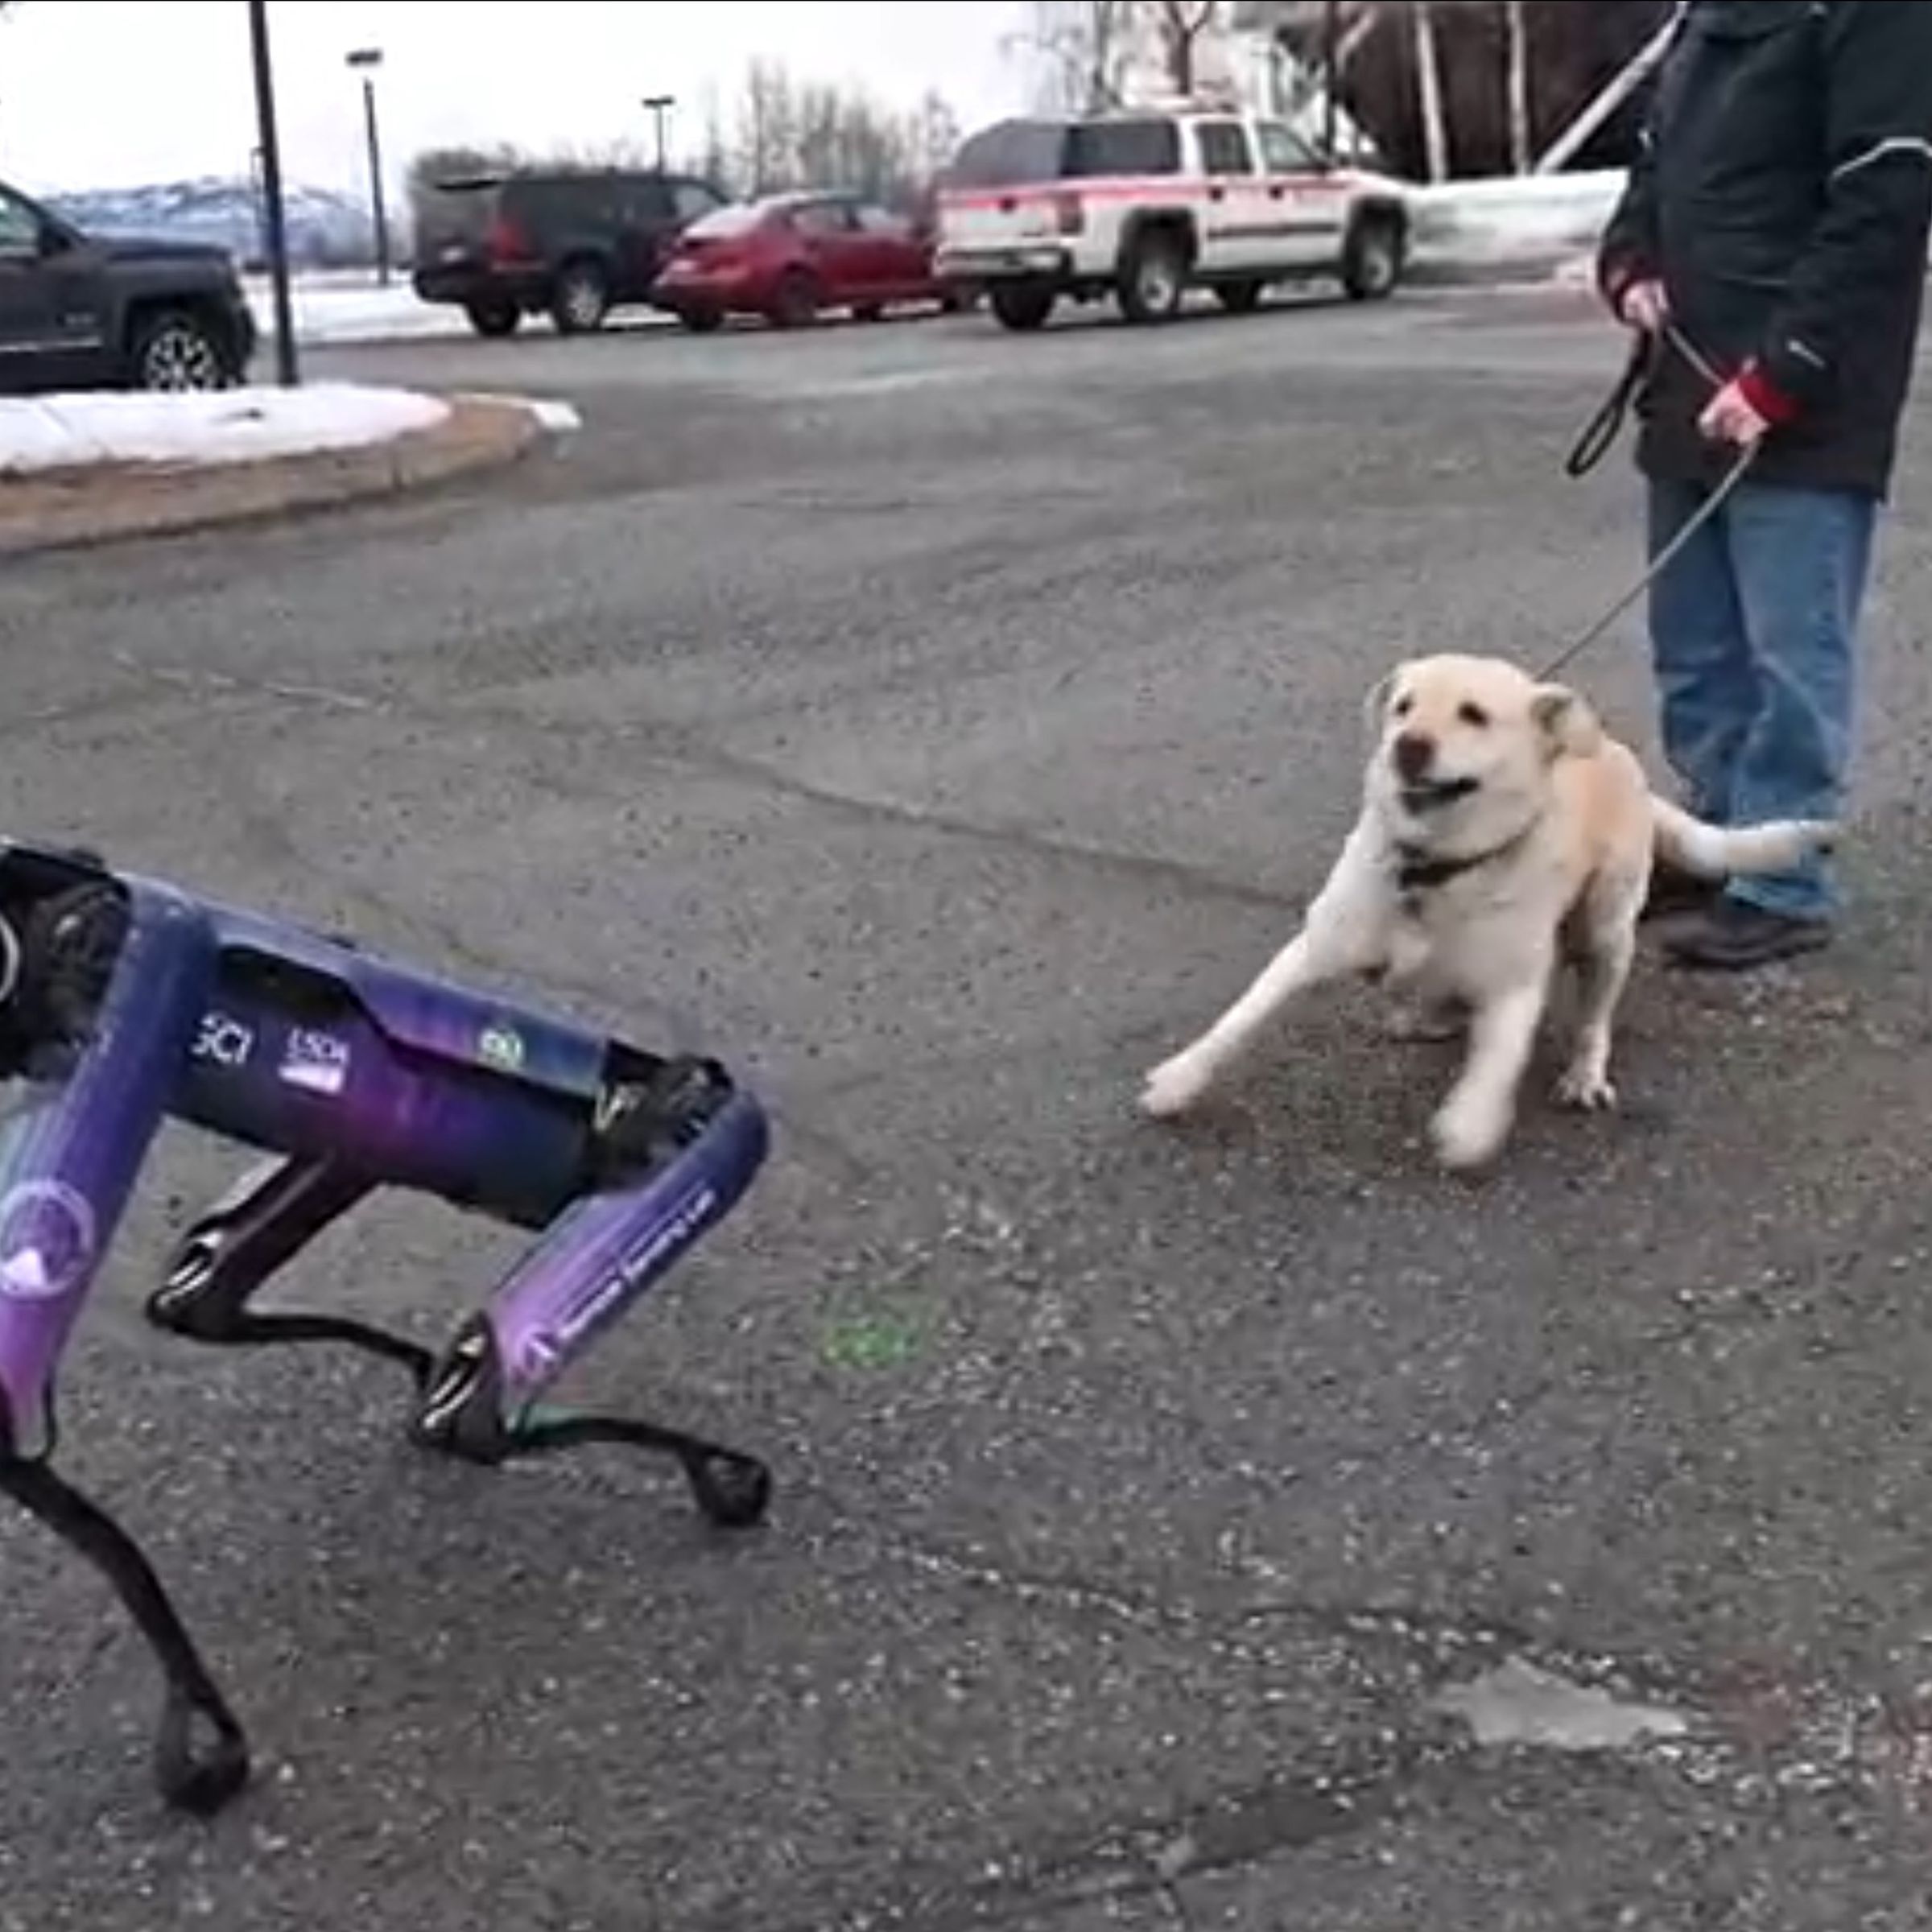 A Boston Dynamics robot scaring a yellow Labrador.